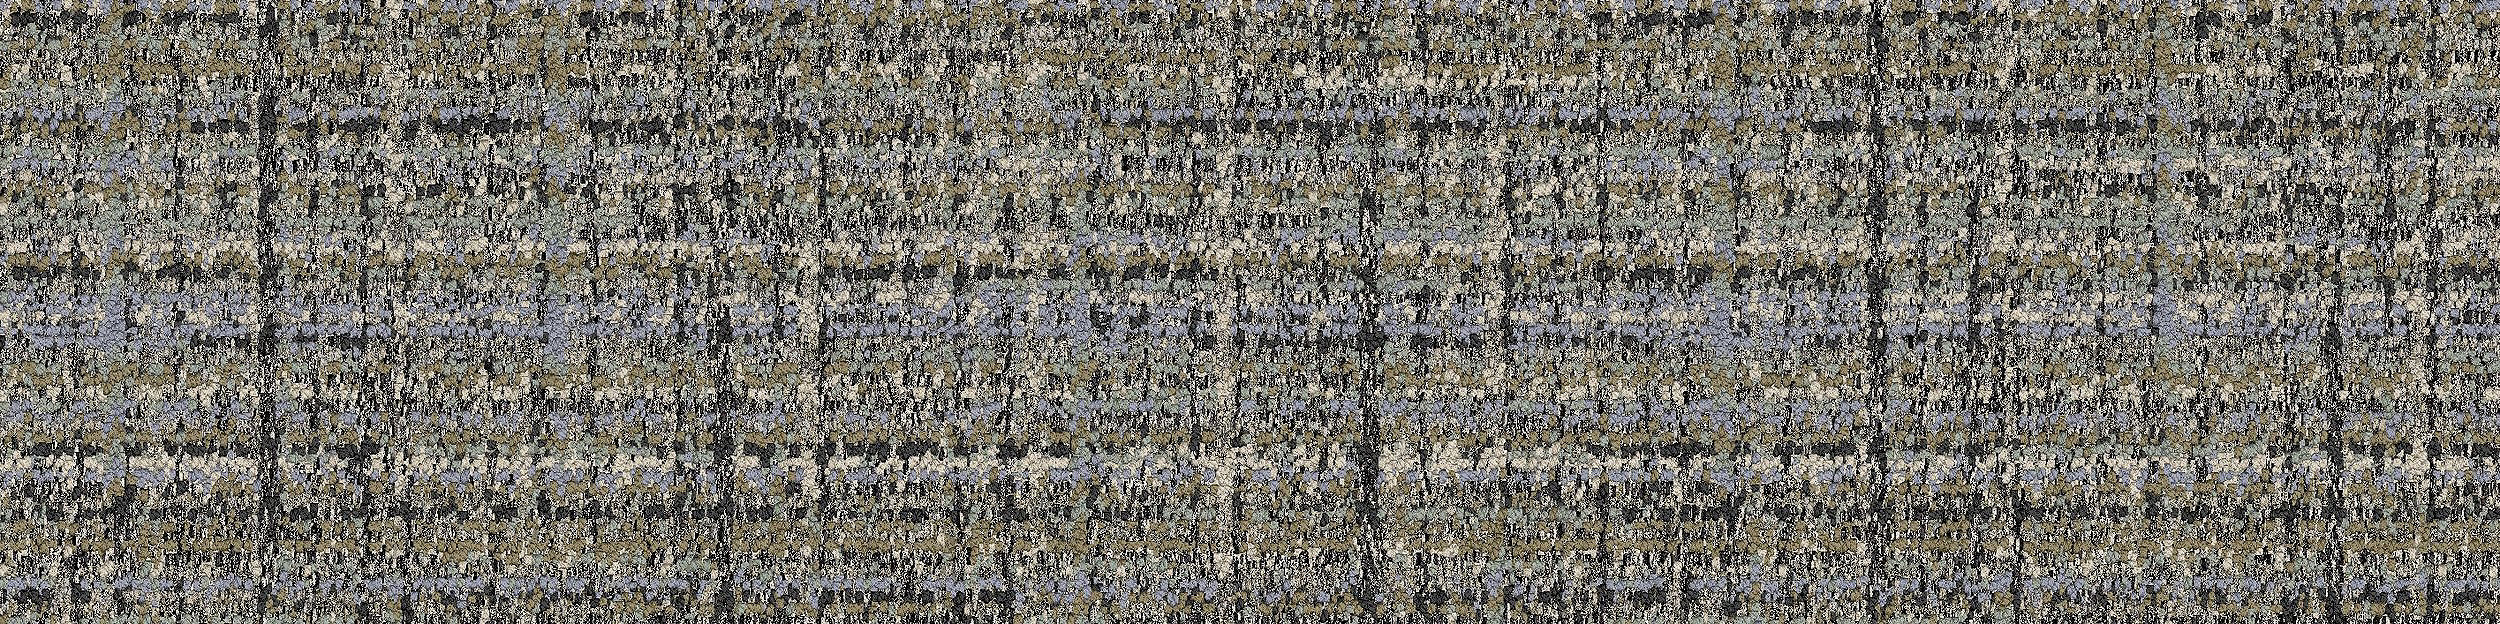 WW895 Carpet Tile In Heather Weave número de imagen 9